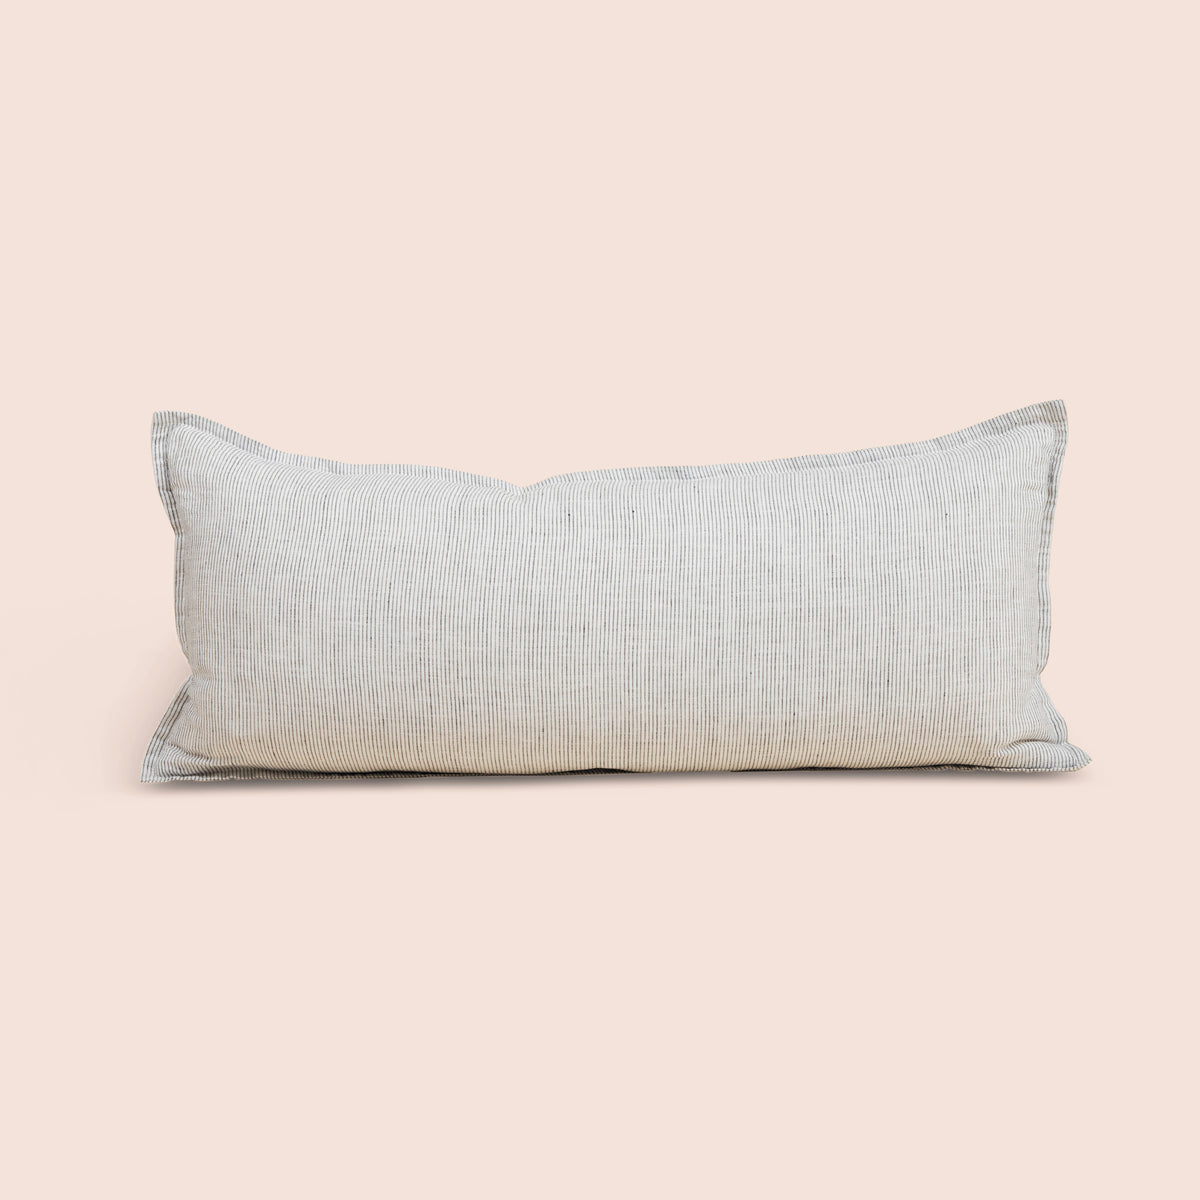 Image of Pinstripe Relaxed Hemp Lumbar Pillow Cover on a lumbar pillow with a light pink background